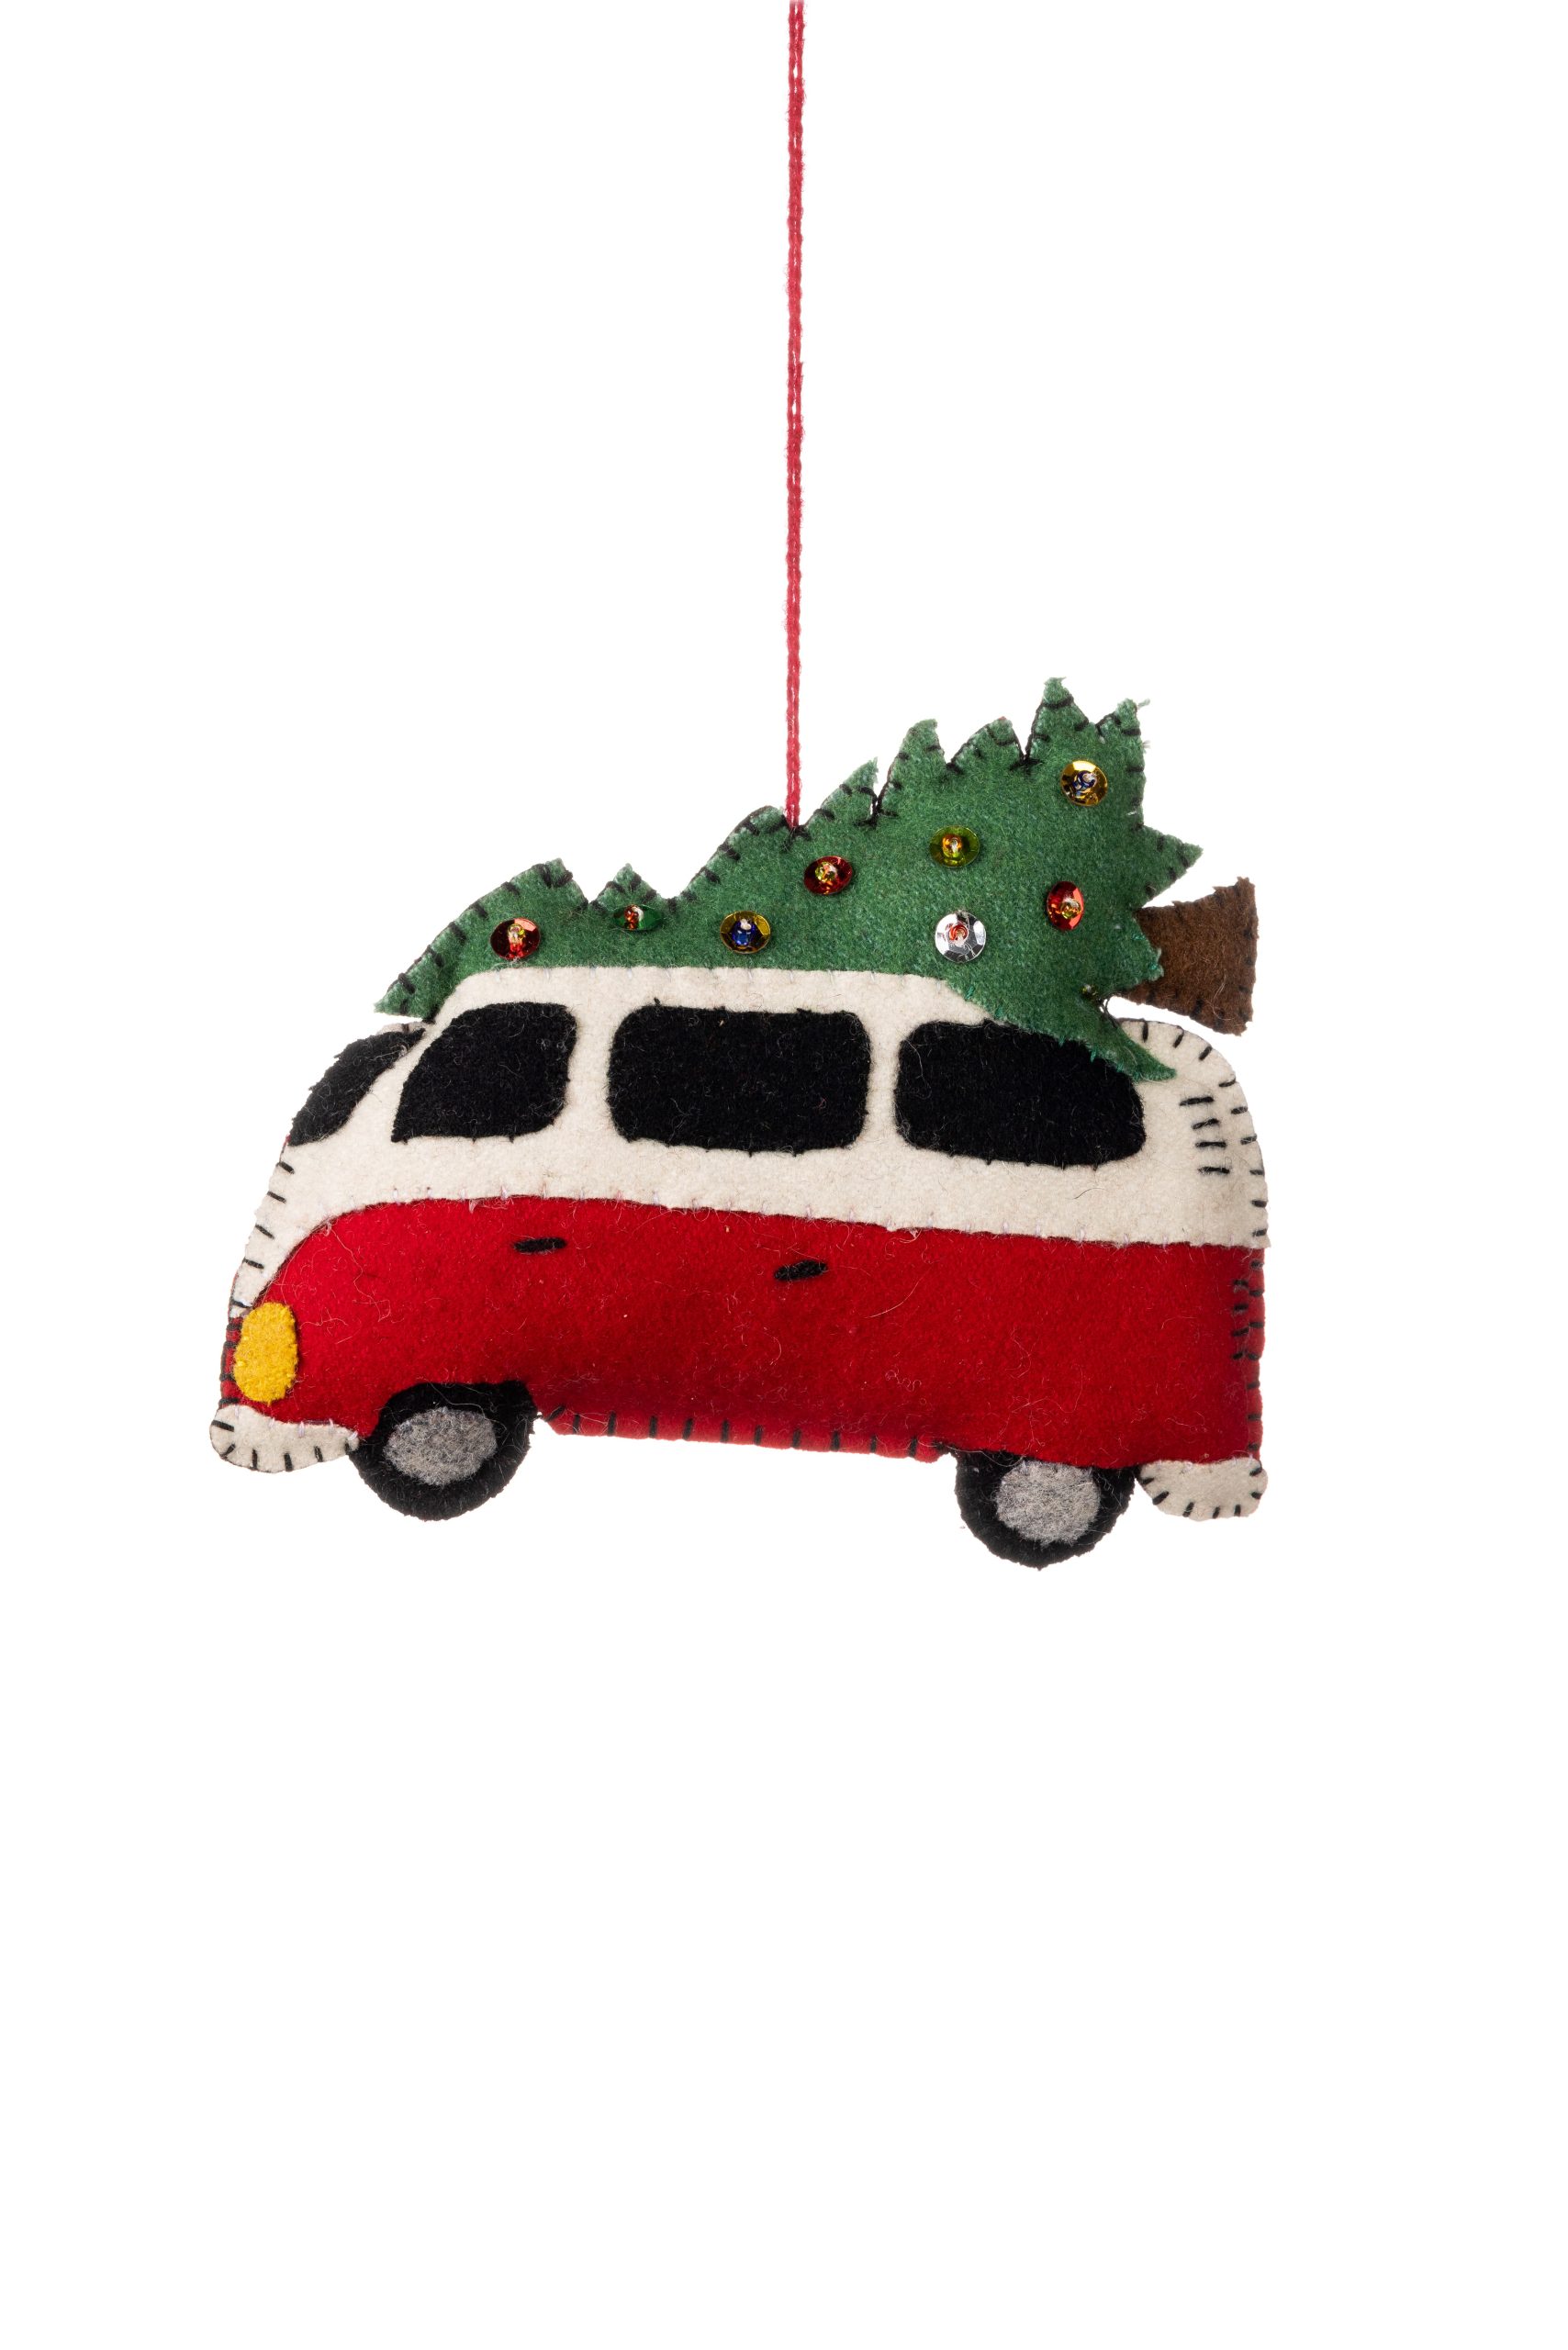 Felt Van with Tree Christmas Decoration